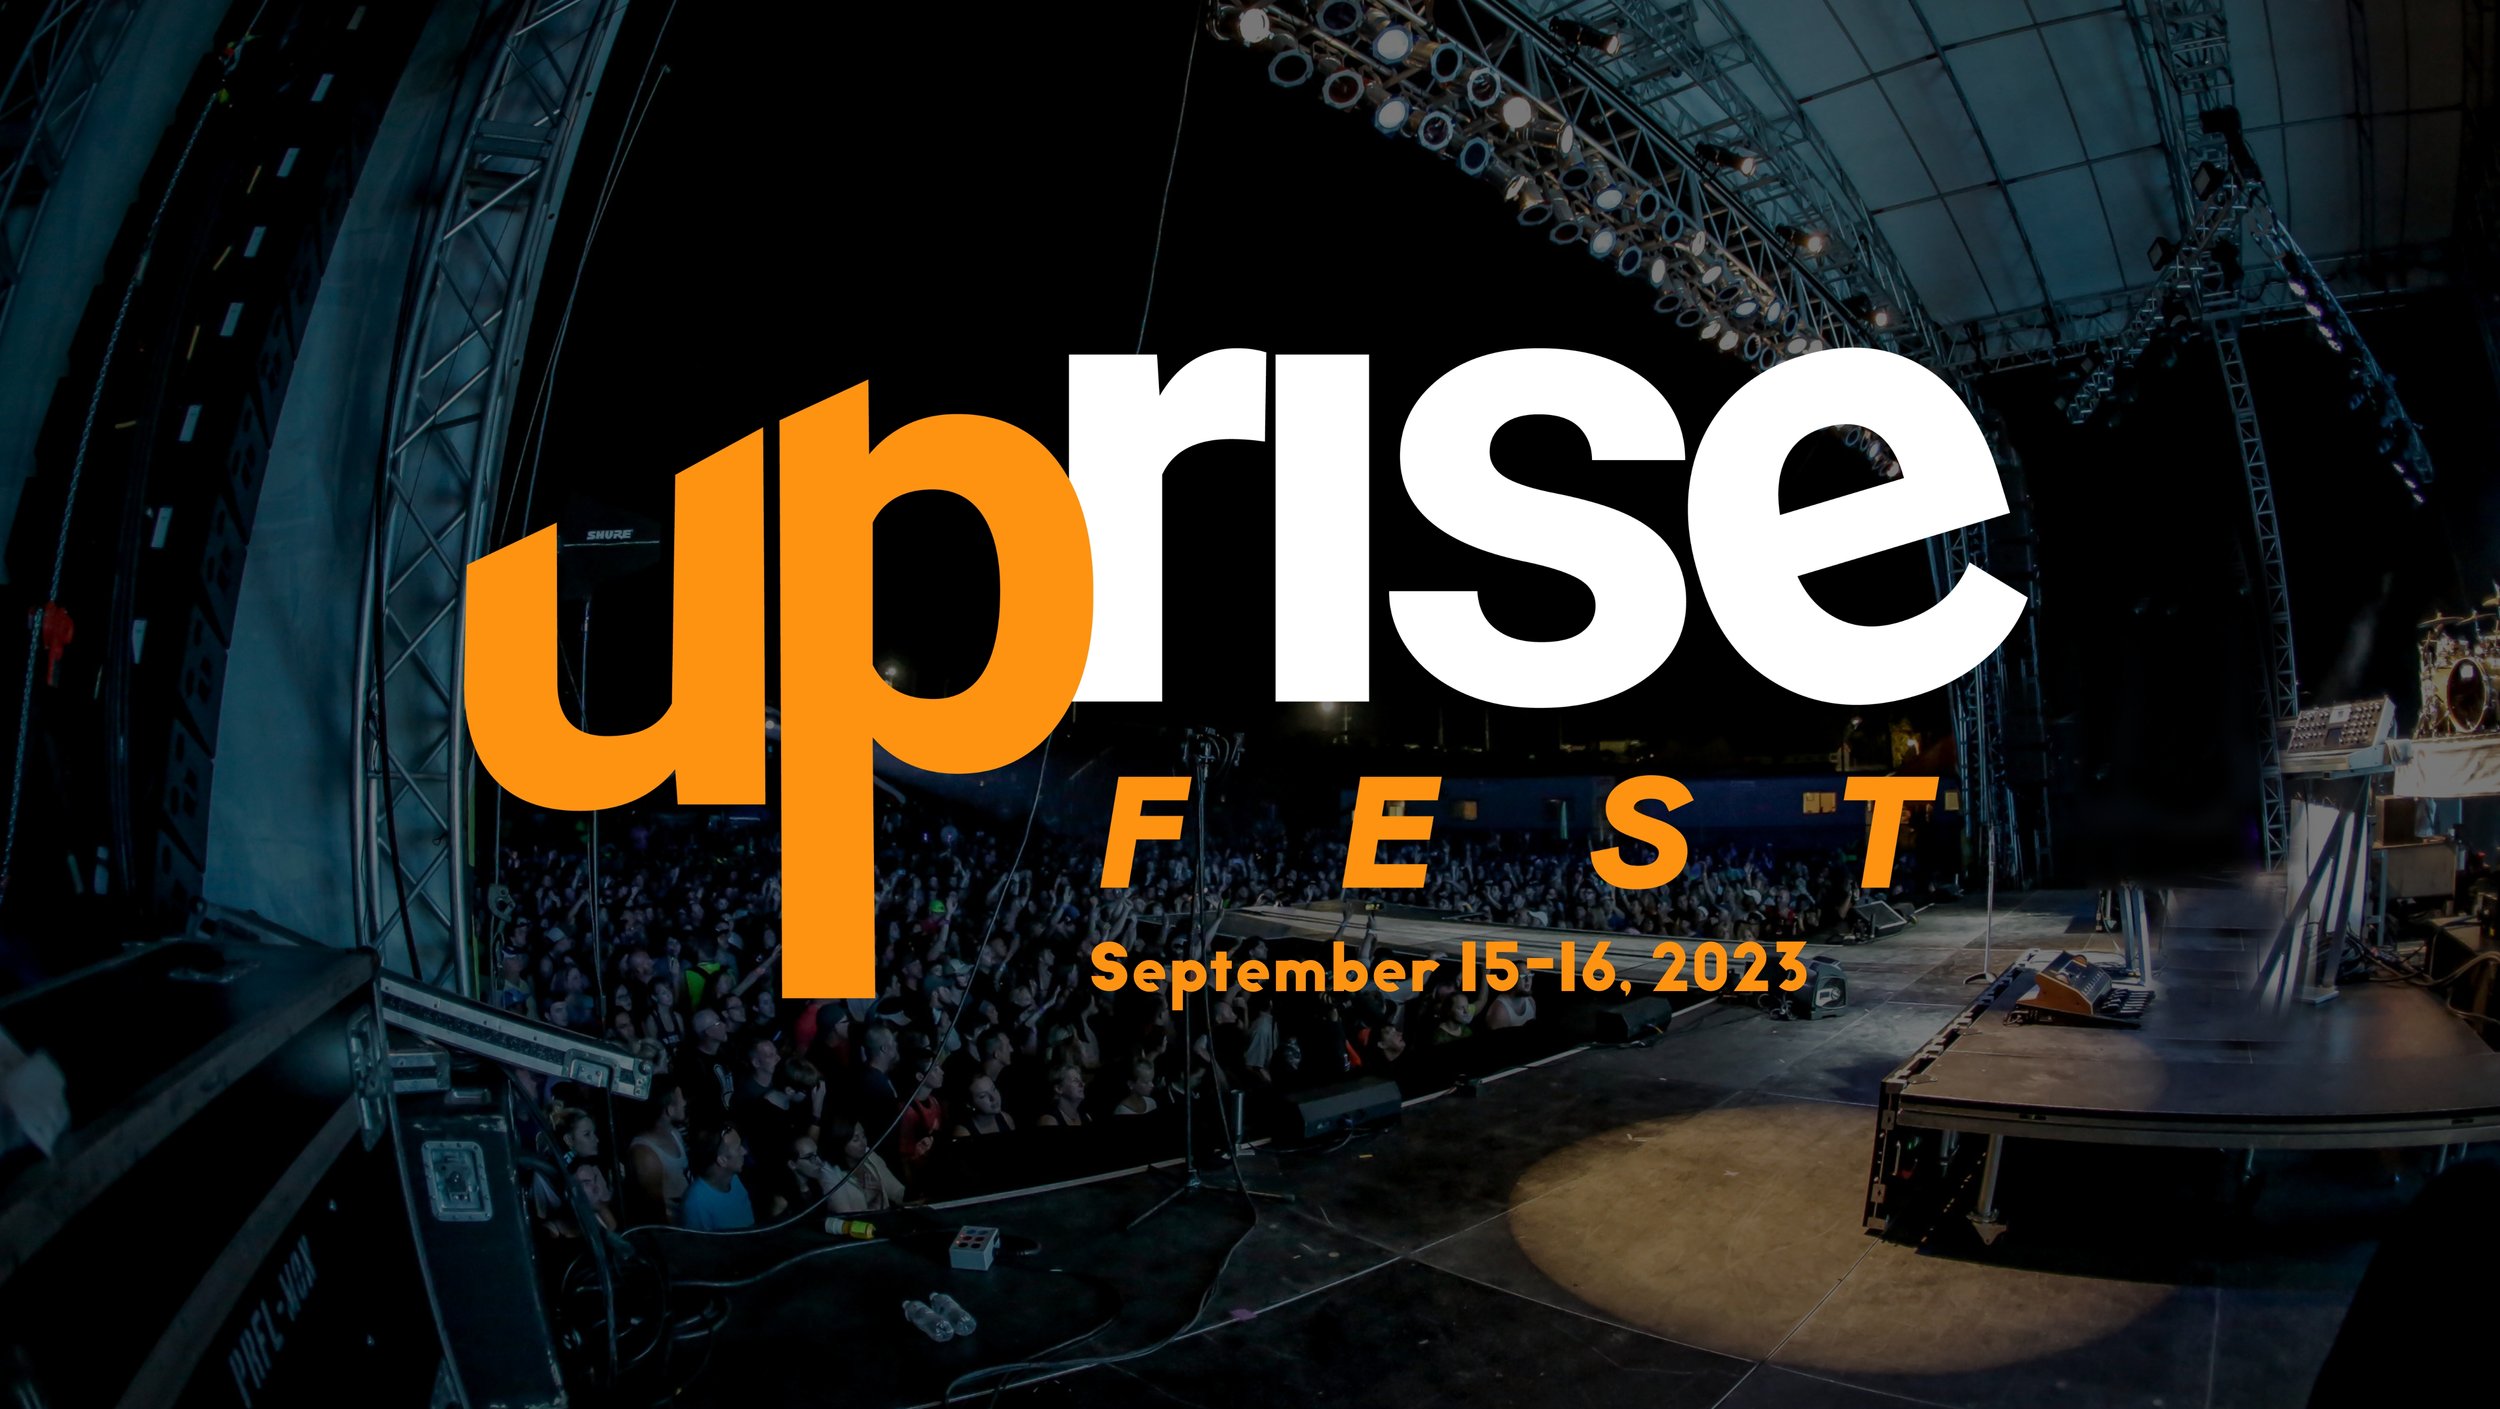 Uprise Festival